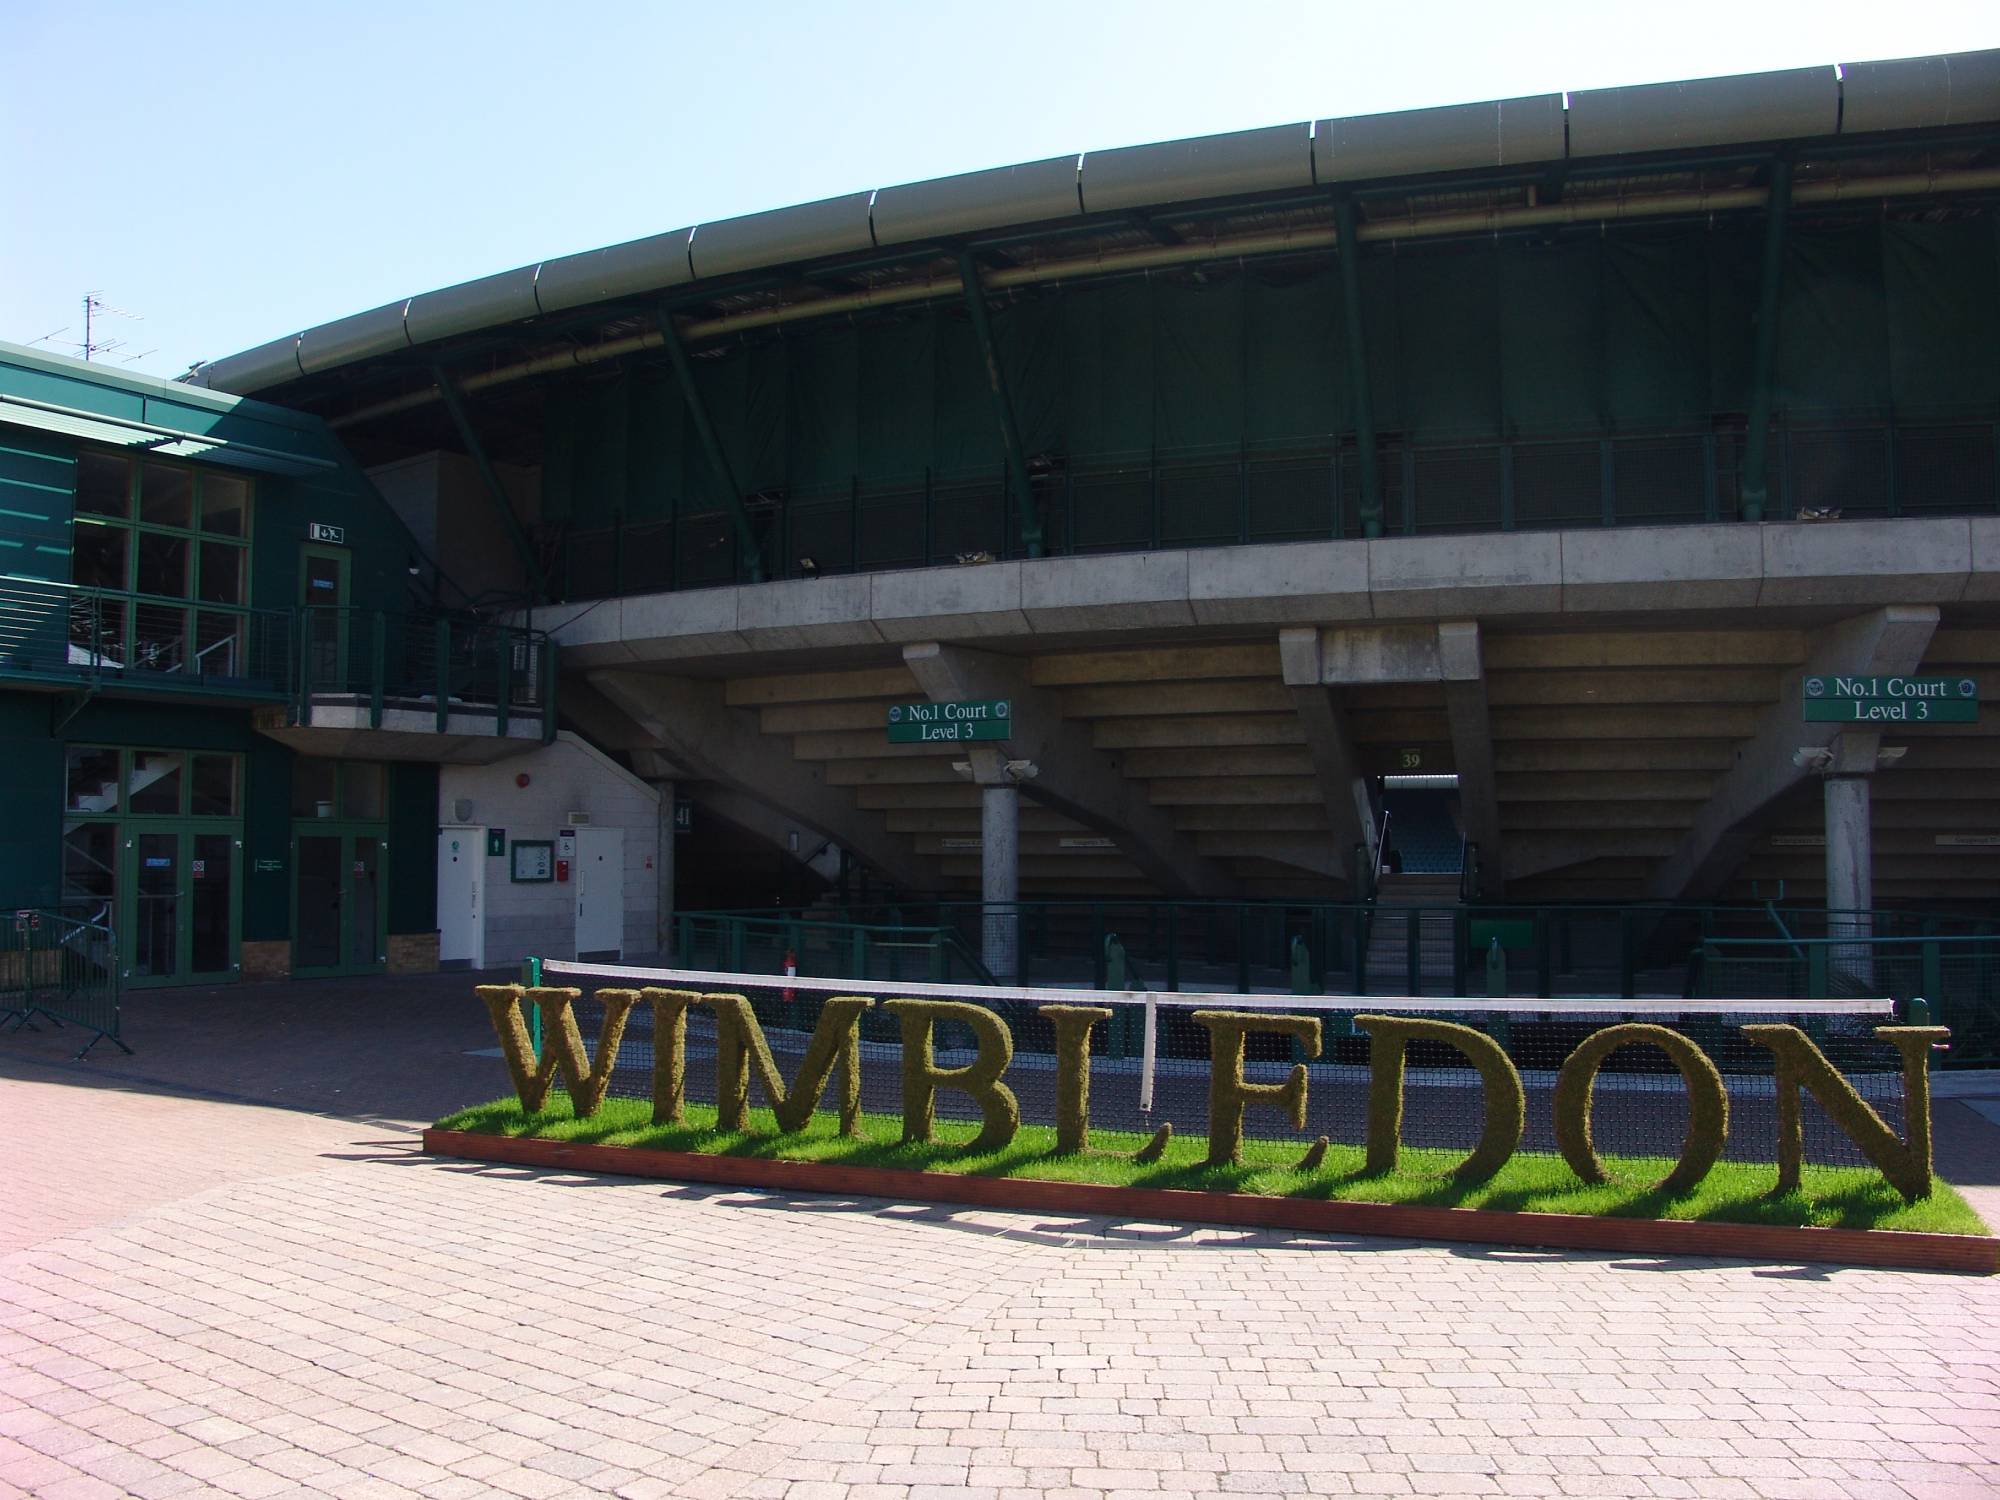 Learn more about Tennis at the Wimbledon Tennis Museum |PassPorter.com